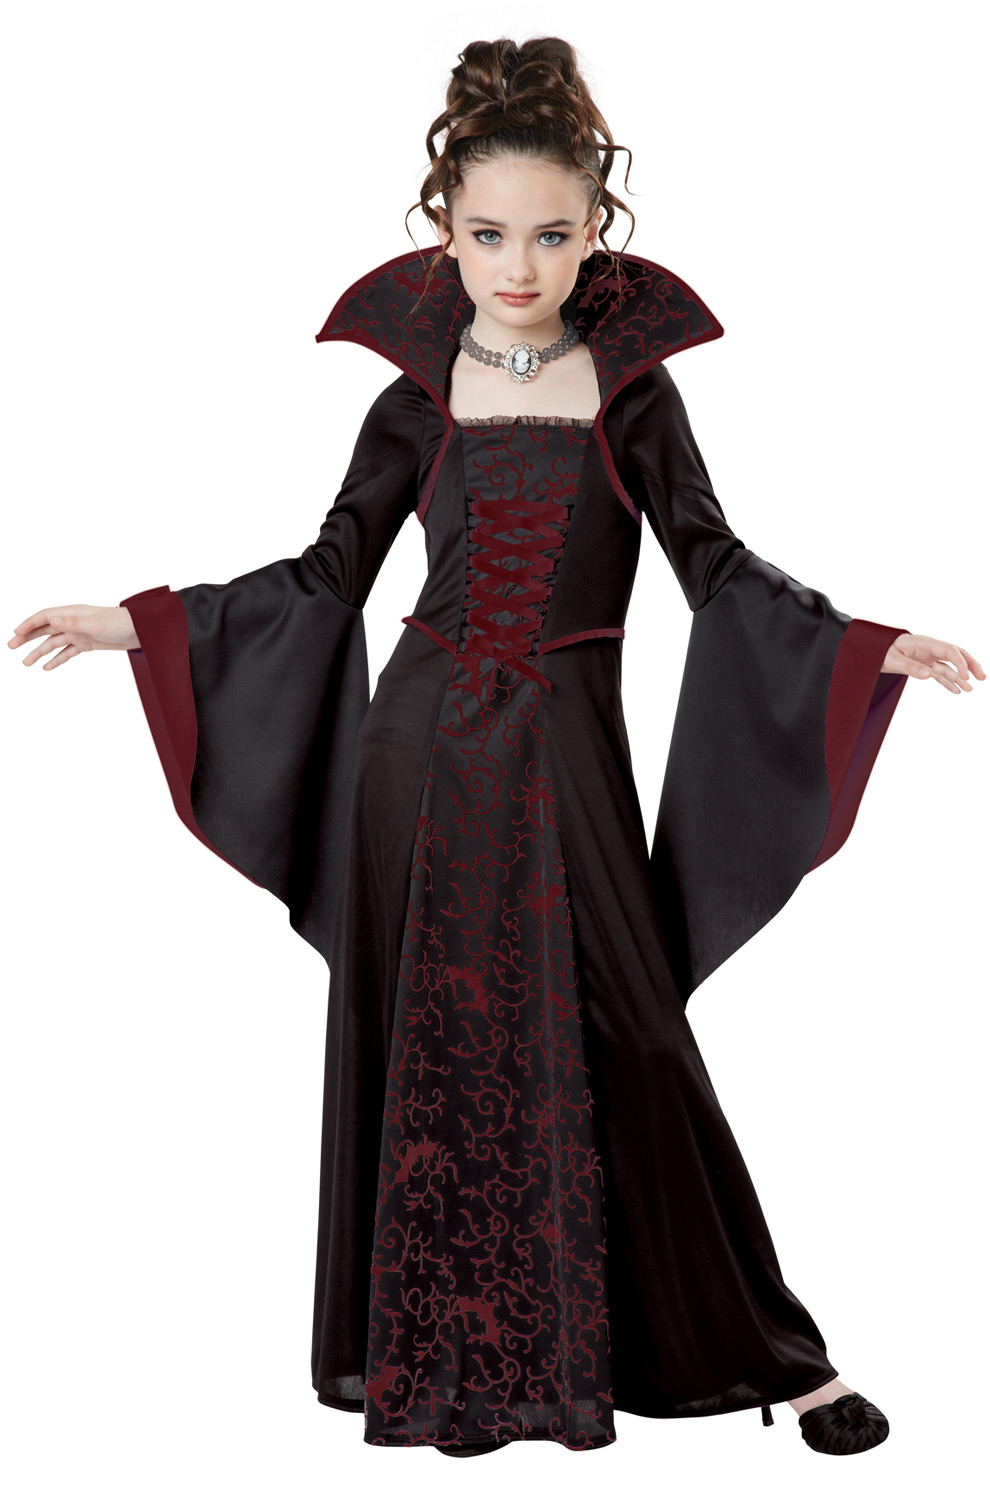 Kids Vampiress Costume Vampire Fancy Dress Party Halloween Outfit 